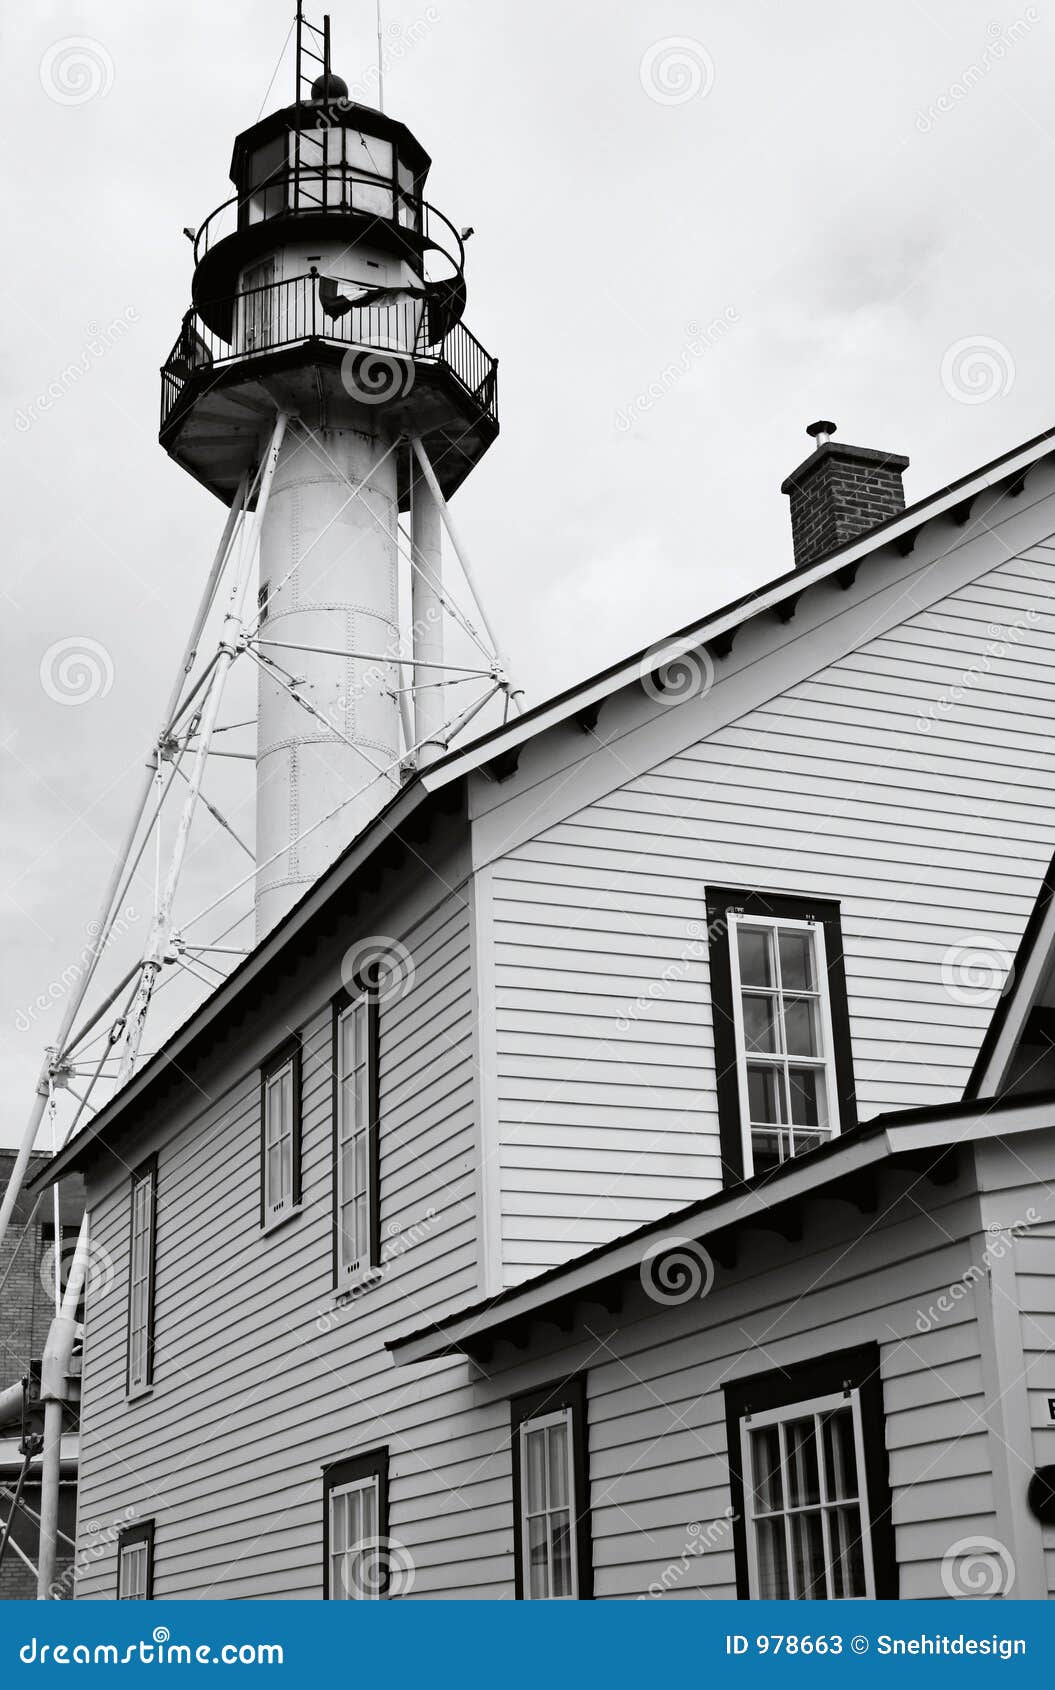 whitefish point lighthouse